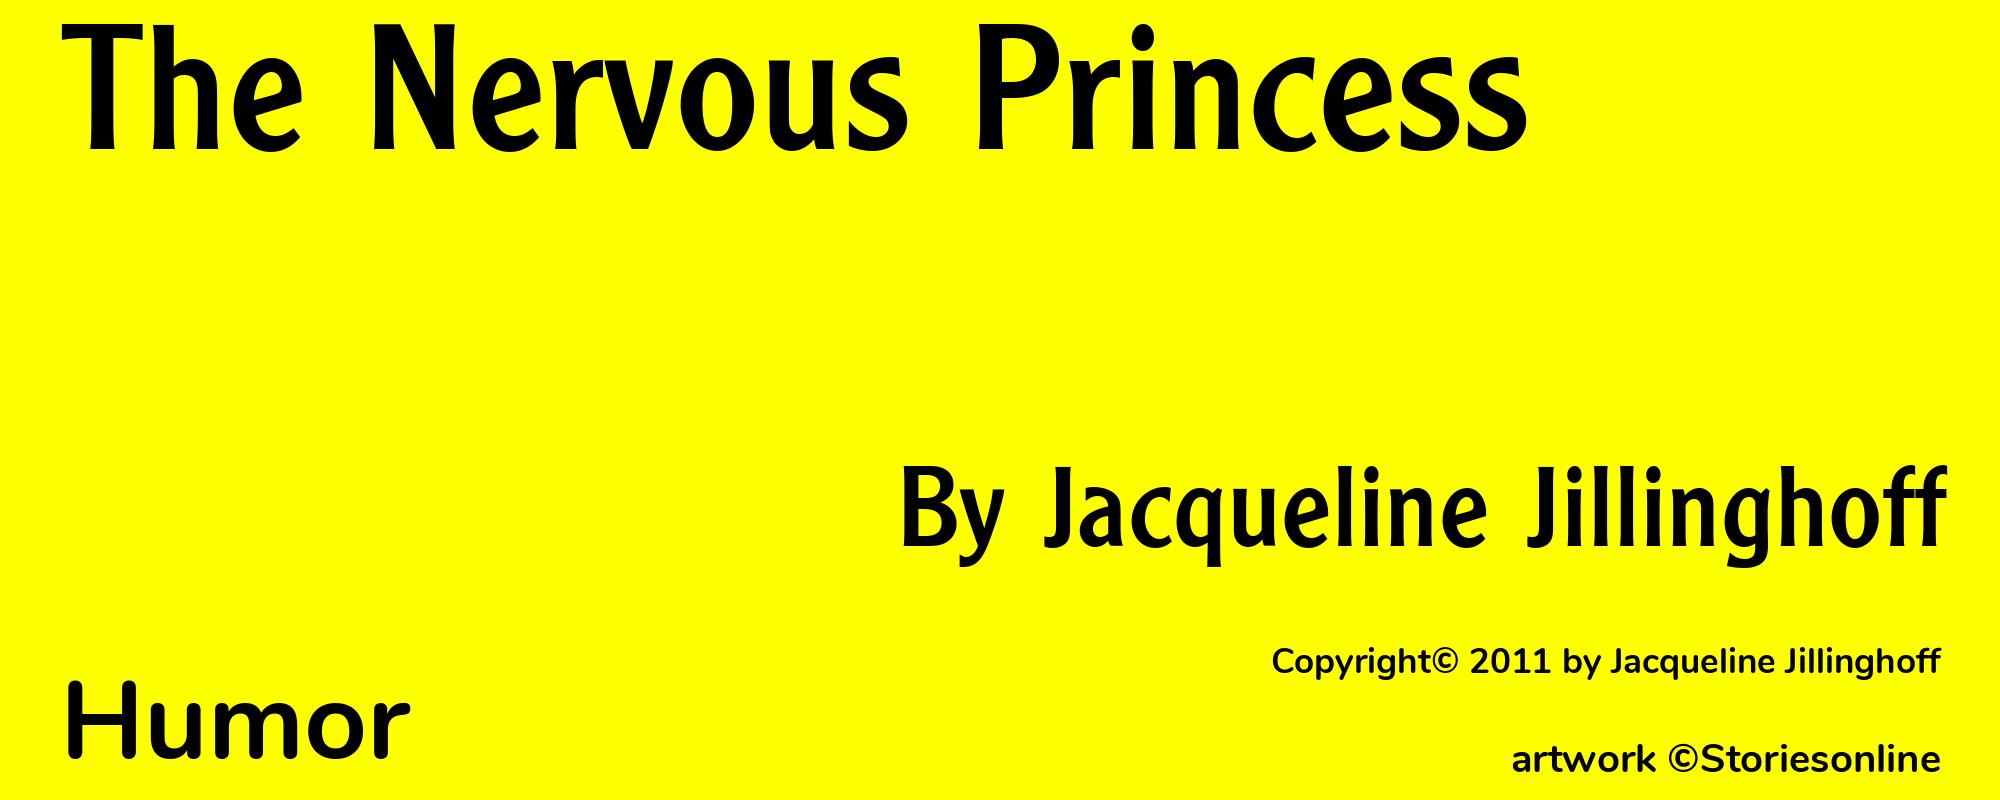 The Nervous Princess - Cover